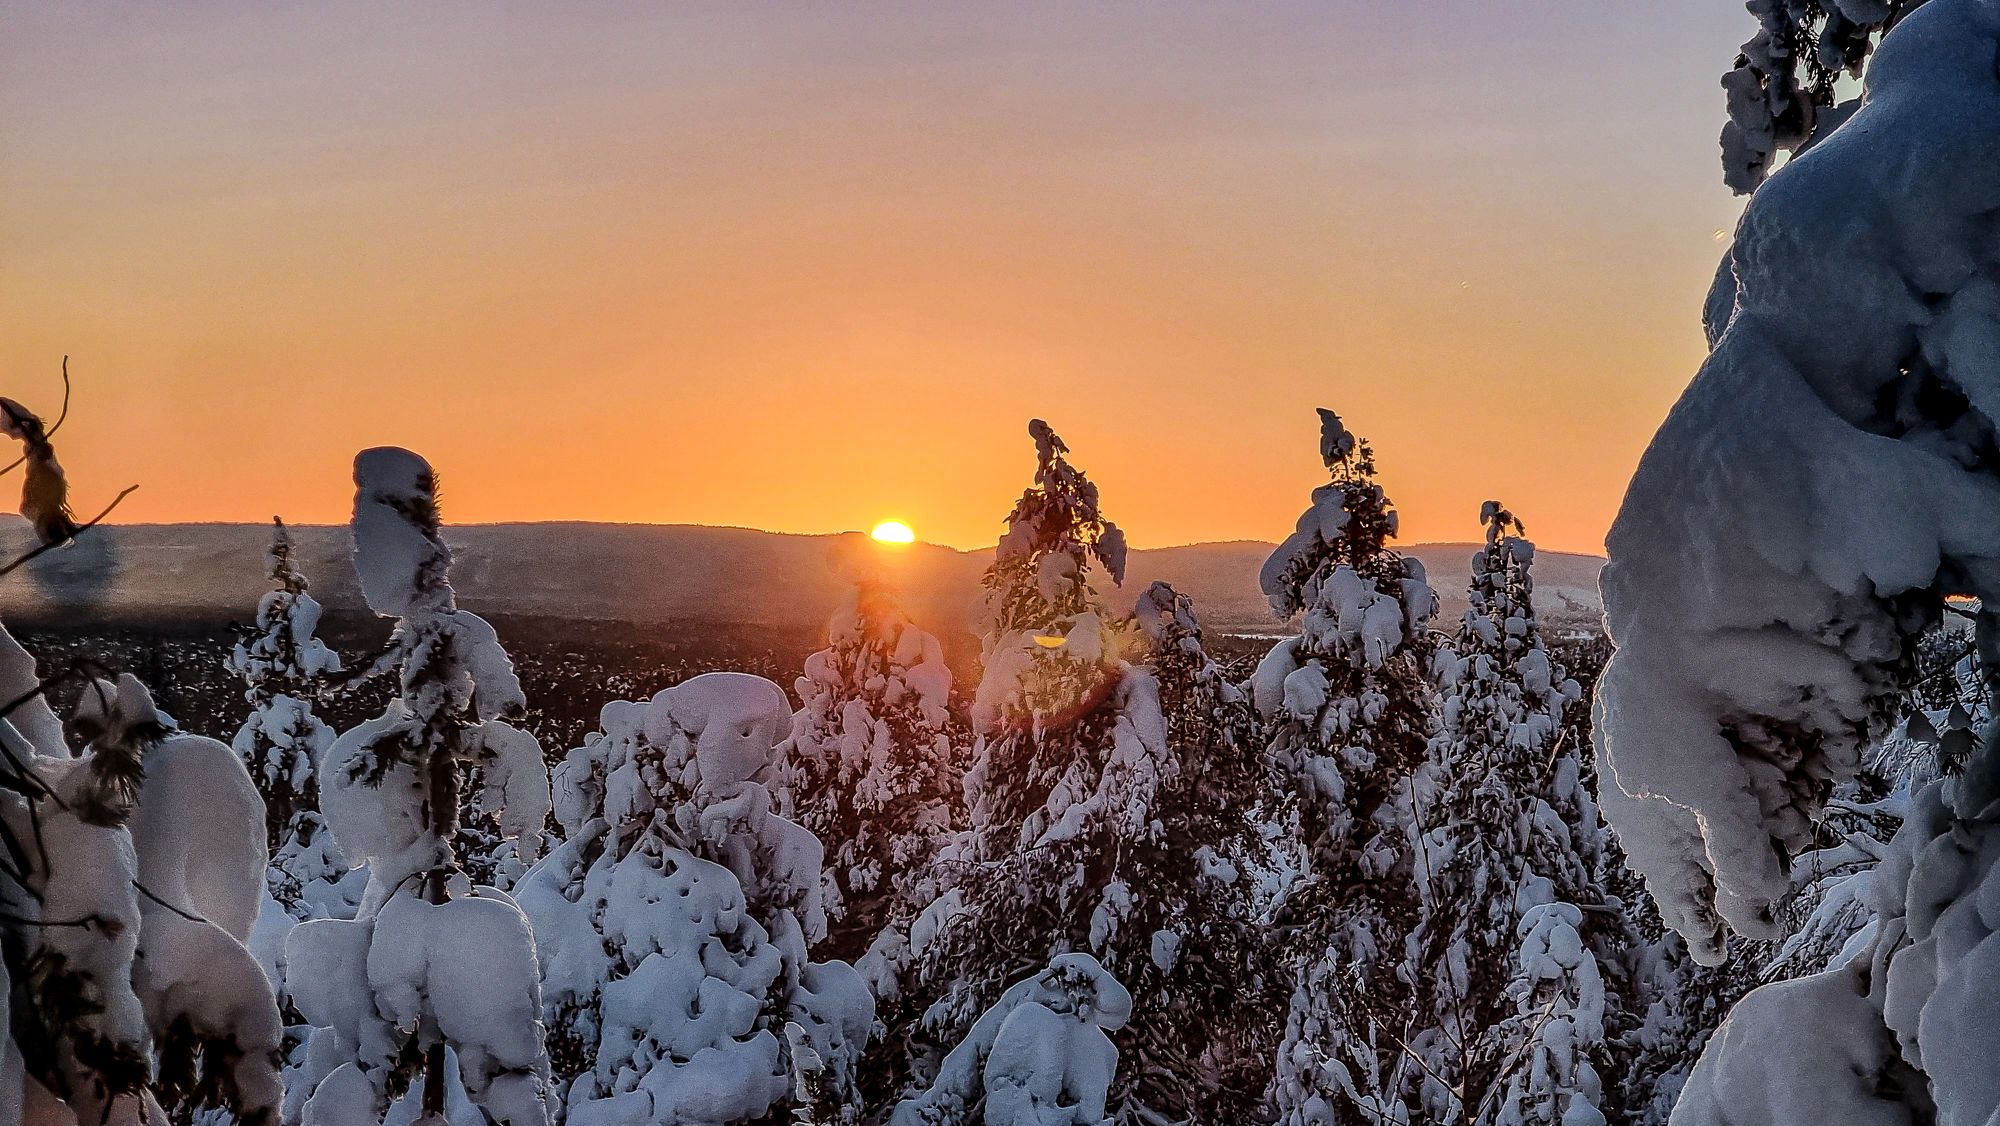 Climbing Frozen Waterfalls in Finland: A Photo Story